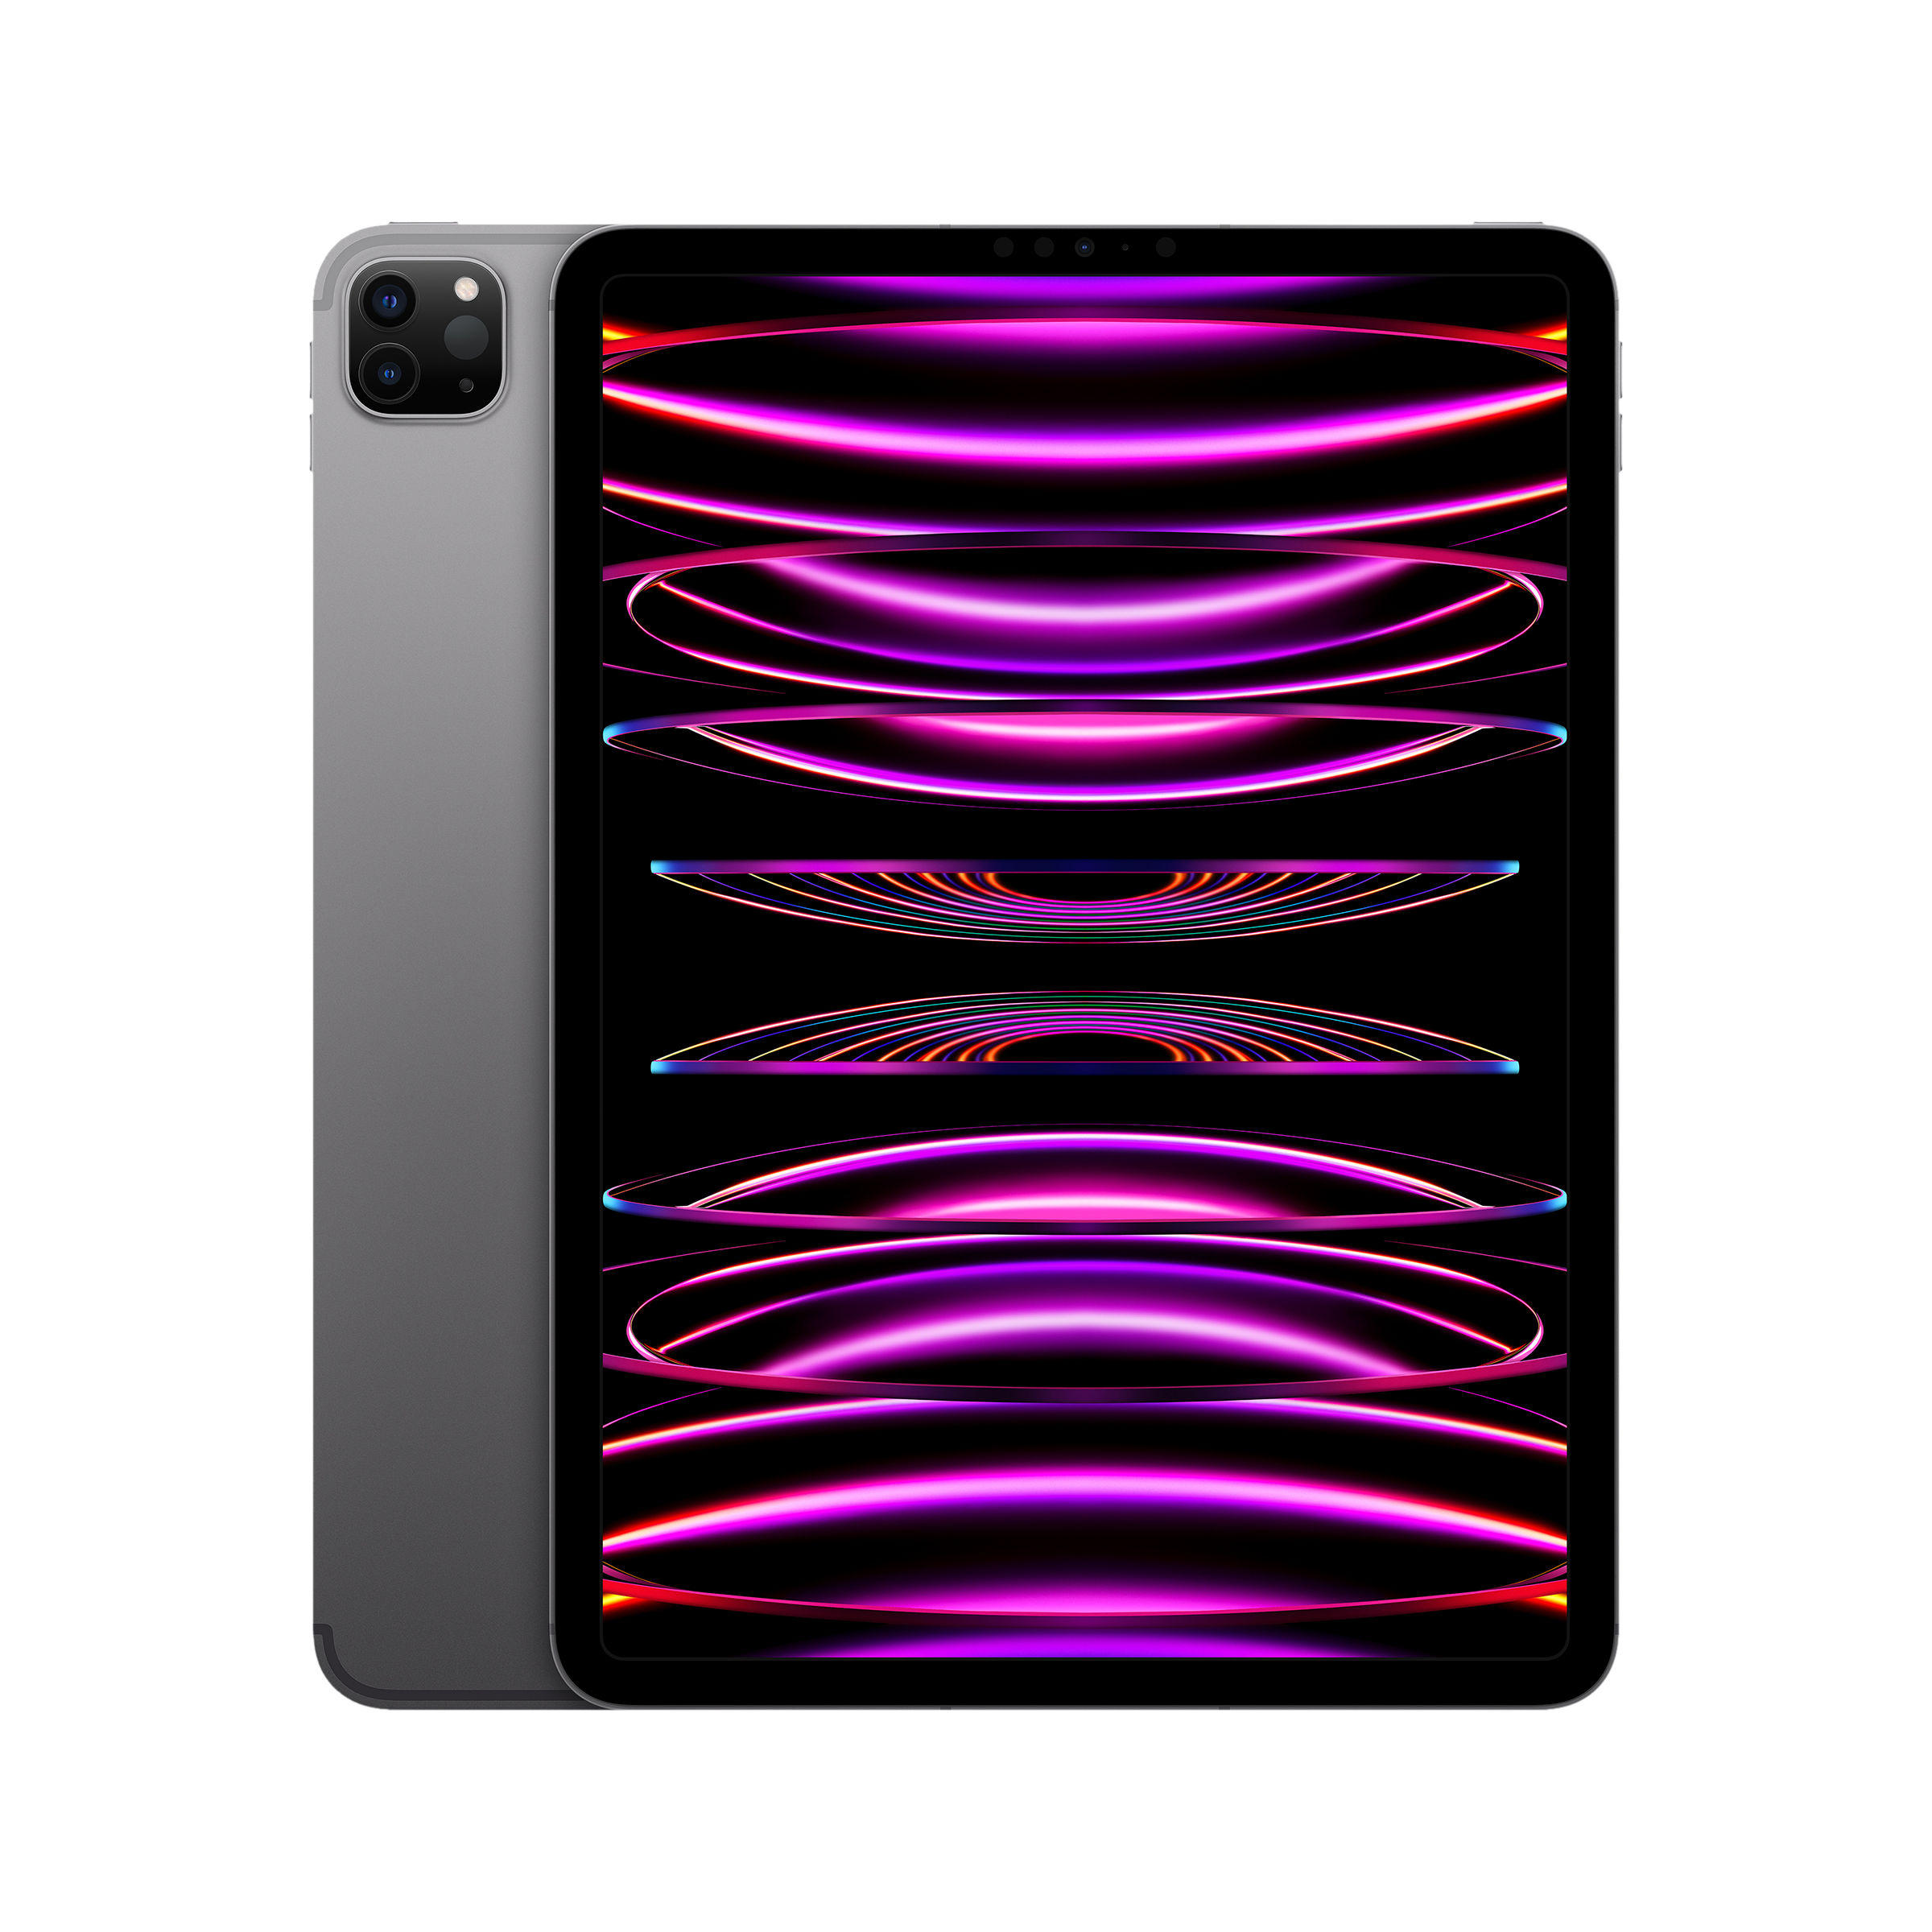 OLED iphone wallpaper 4k